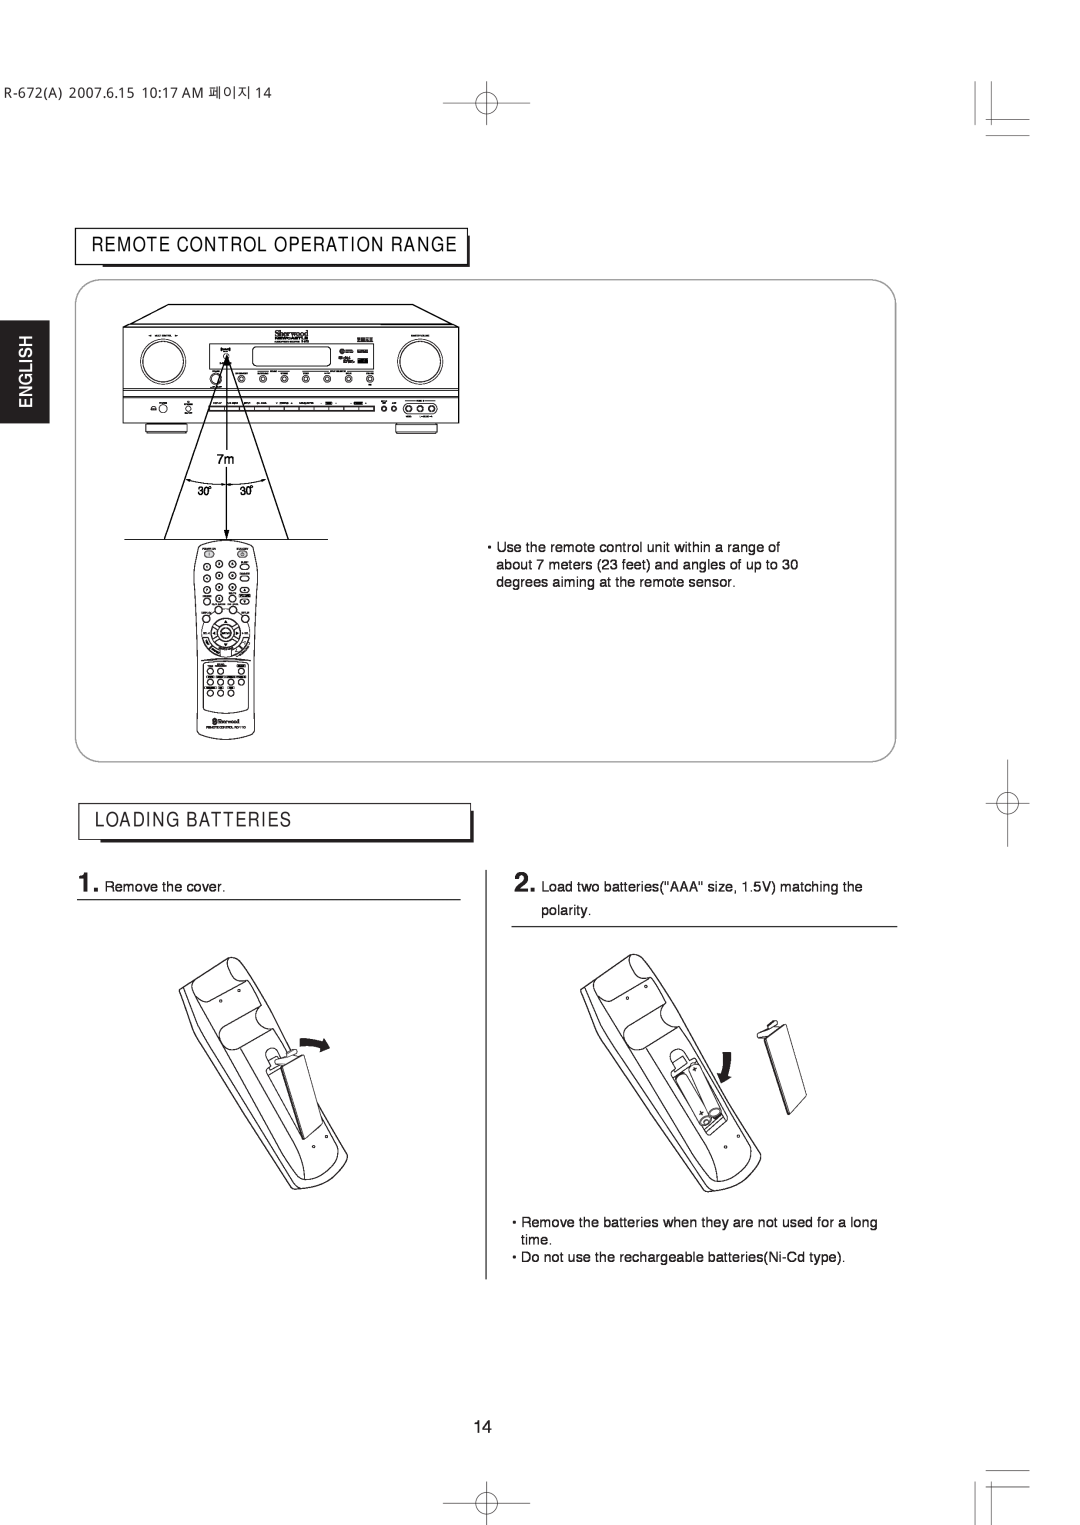 XM Satellite Radio manual Loading Batteries, Remote Control Operation Range, English, R-672A2007.6.15 10:17 AM 페이지 